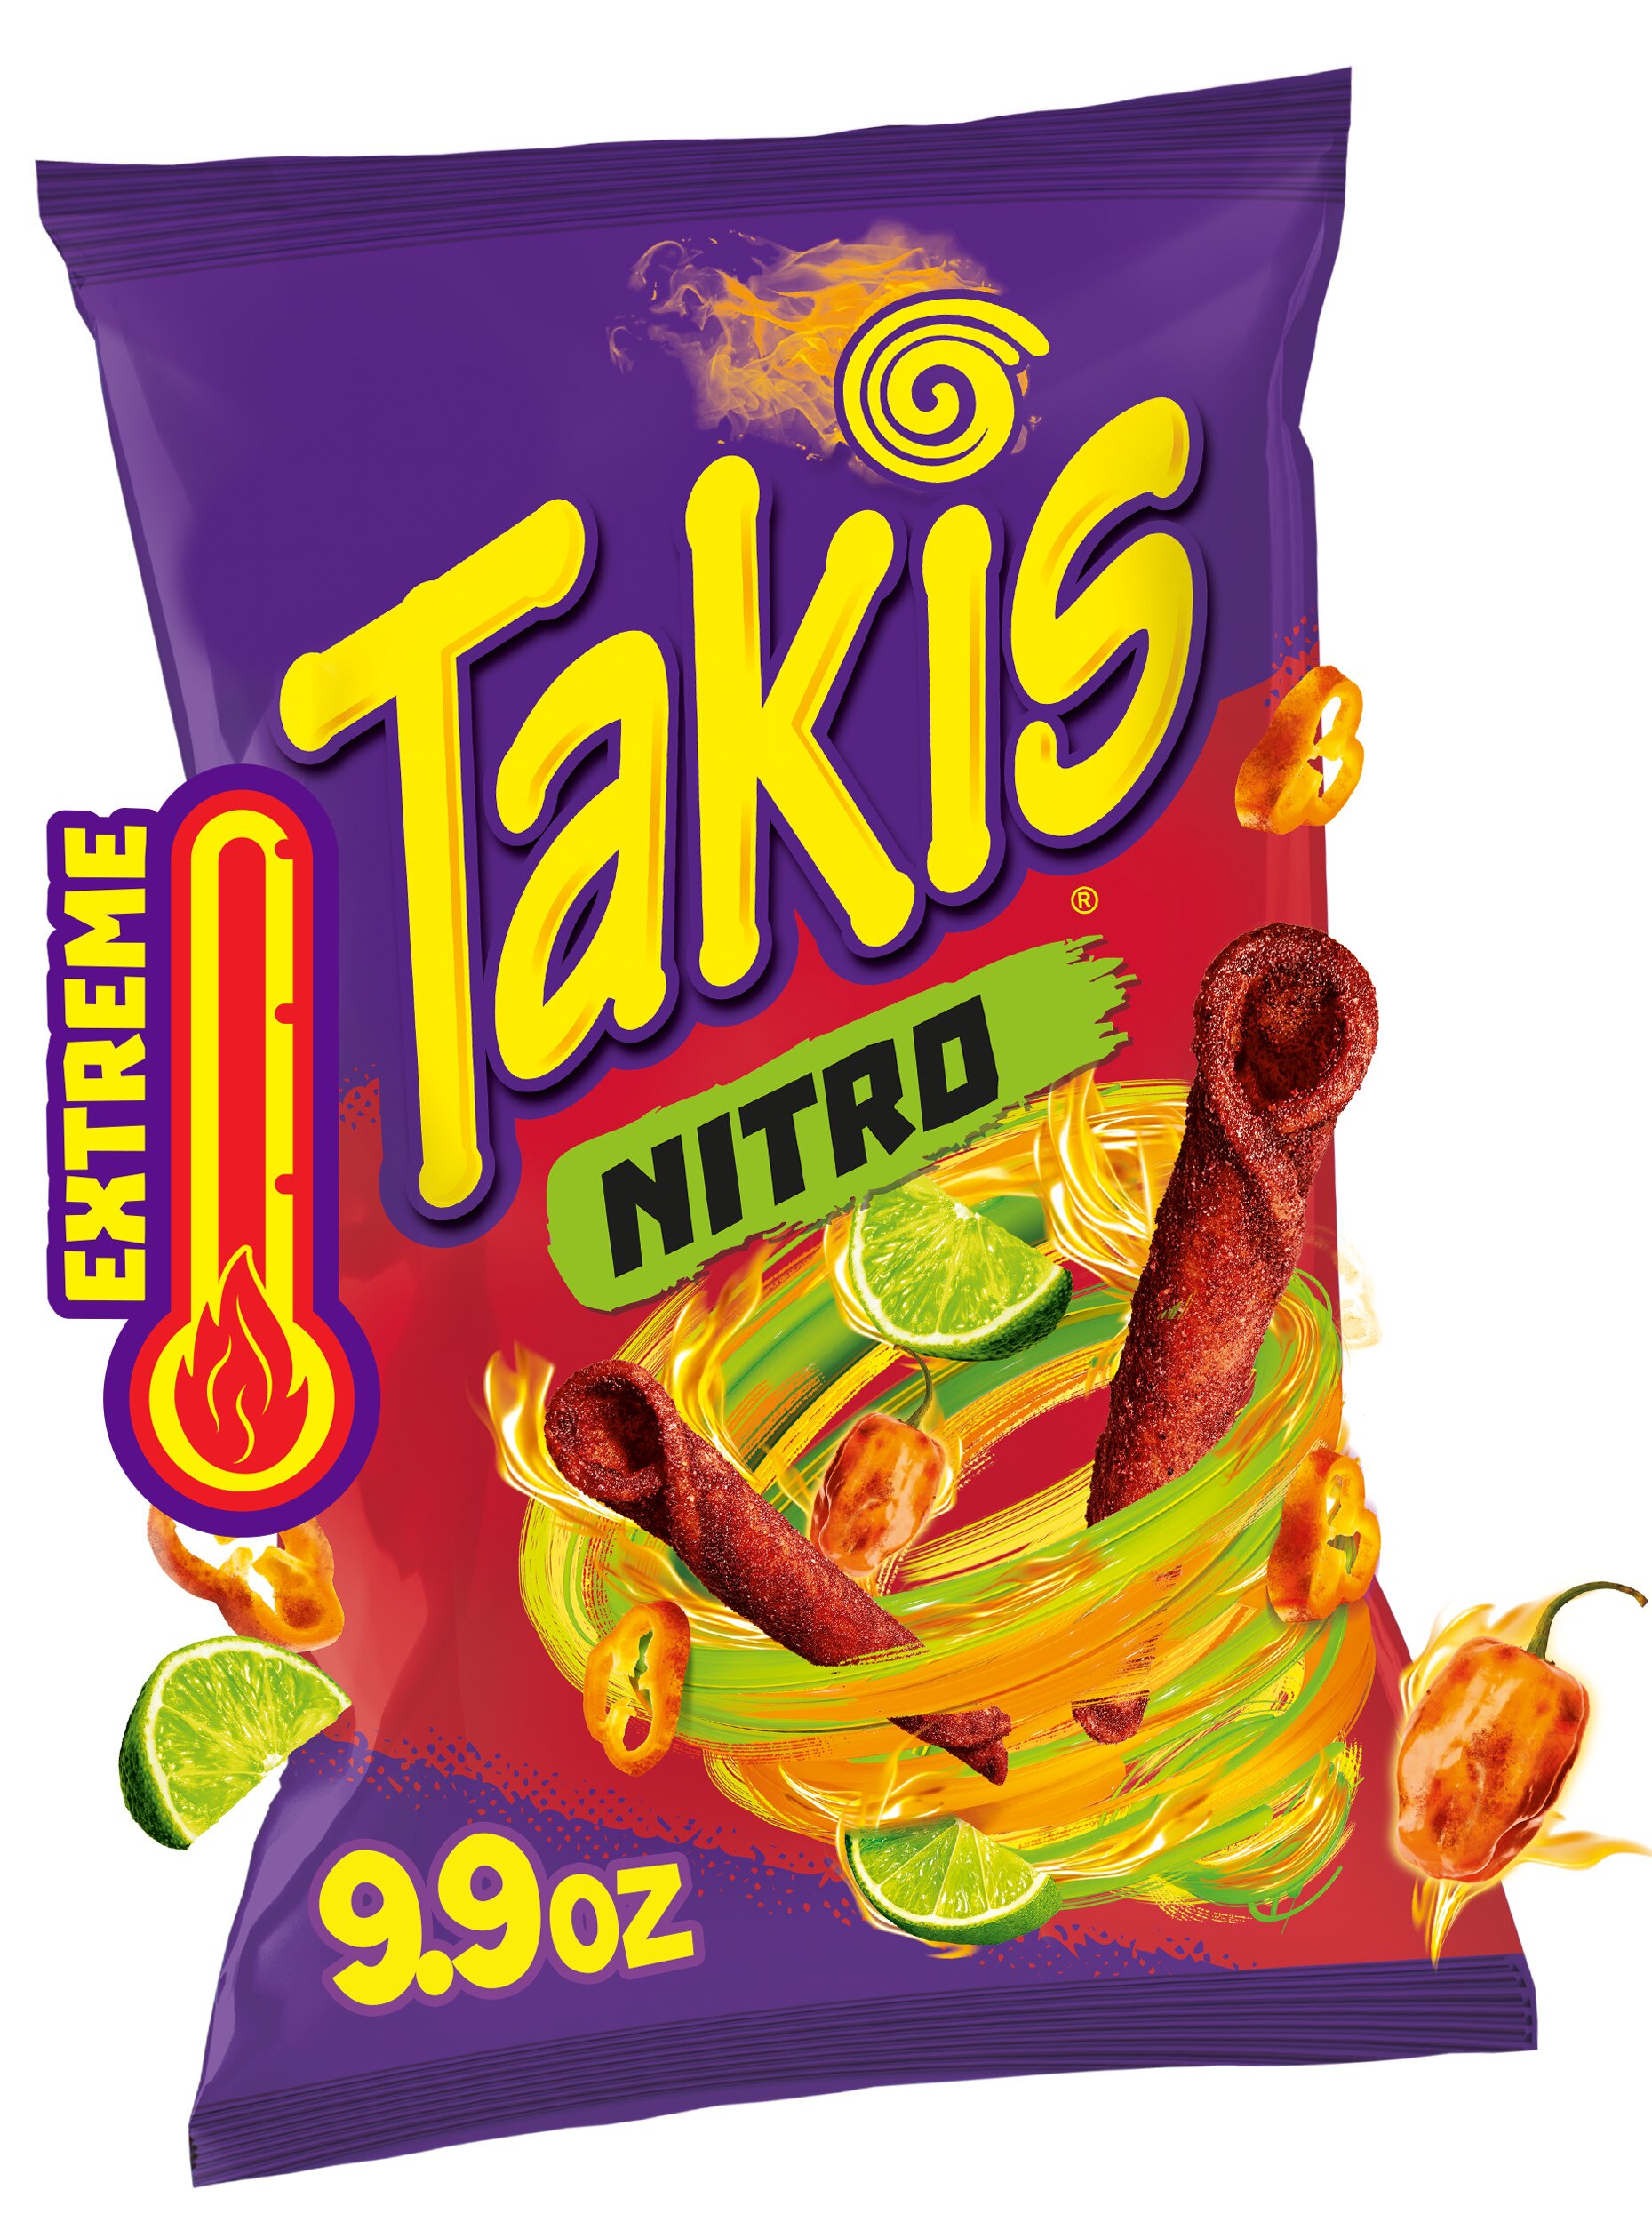 Takis Nitro Habanero & Lime Rolled Tortilla Chips